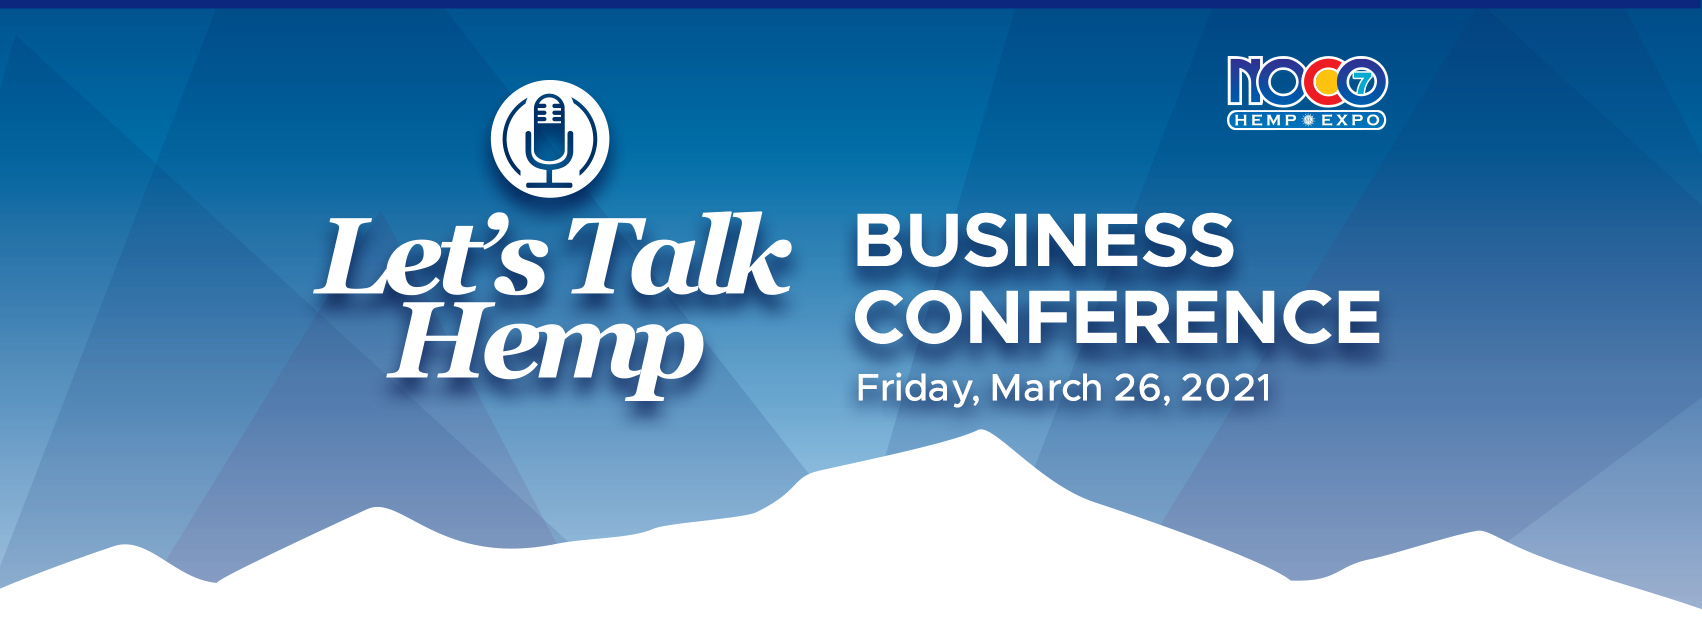 Let's Talk Hemp Business Conference